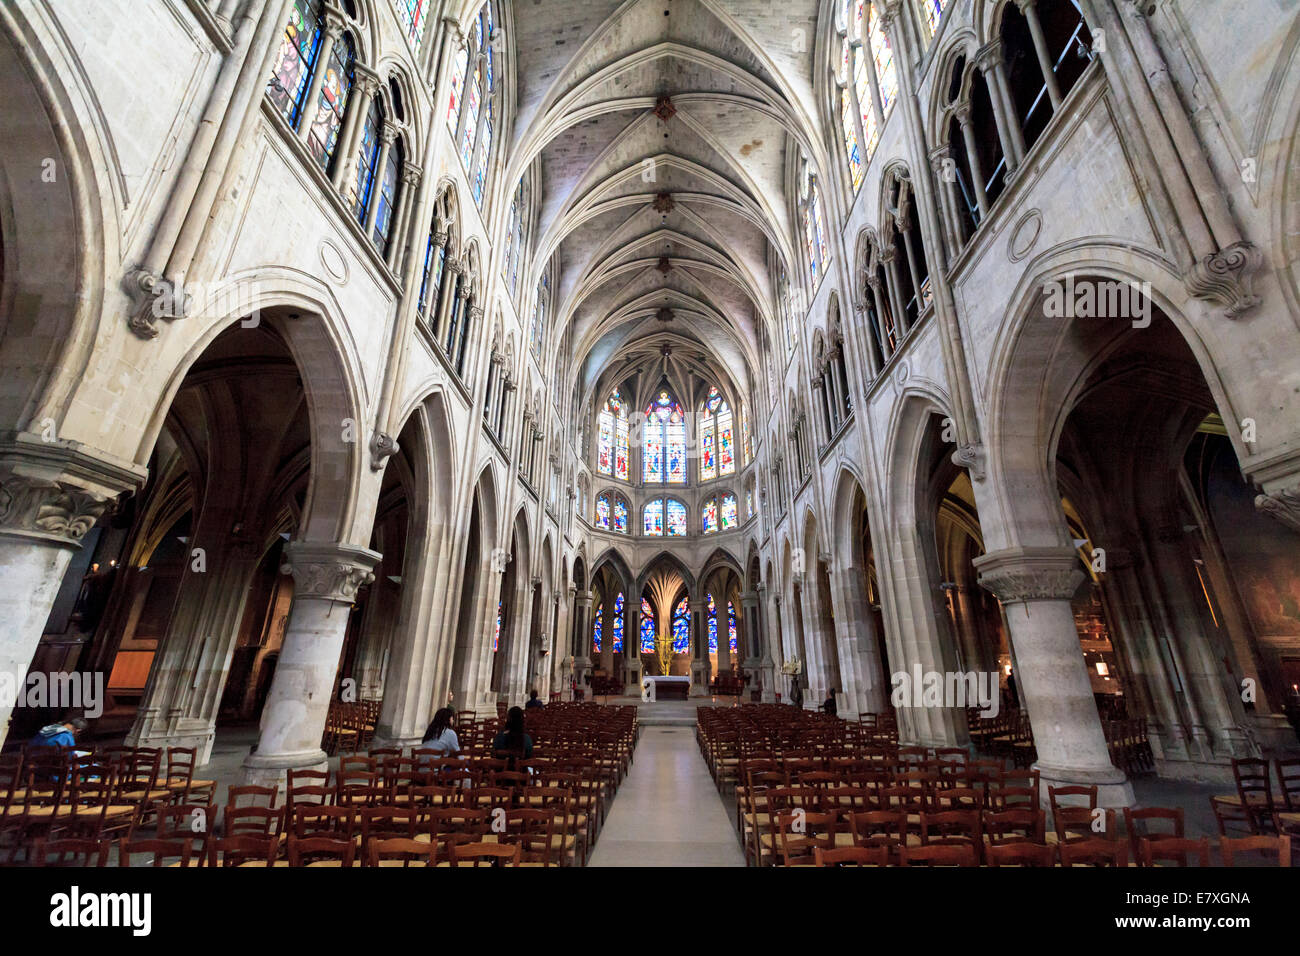 Inside L 'Eglise Saint-Severin, Paris, France Stock Photo